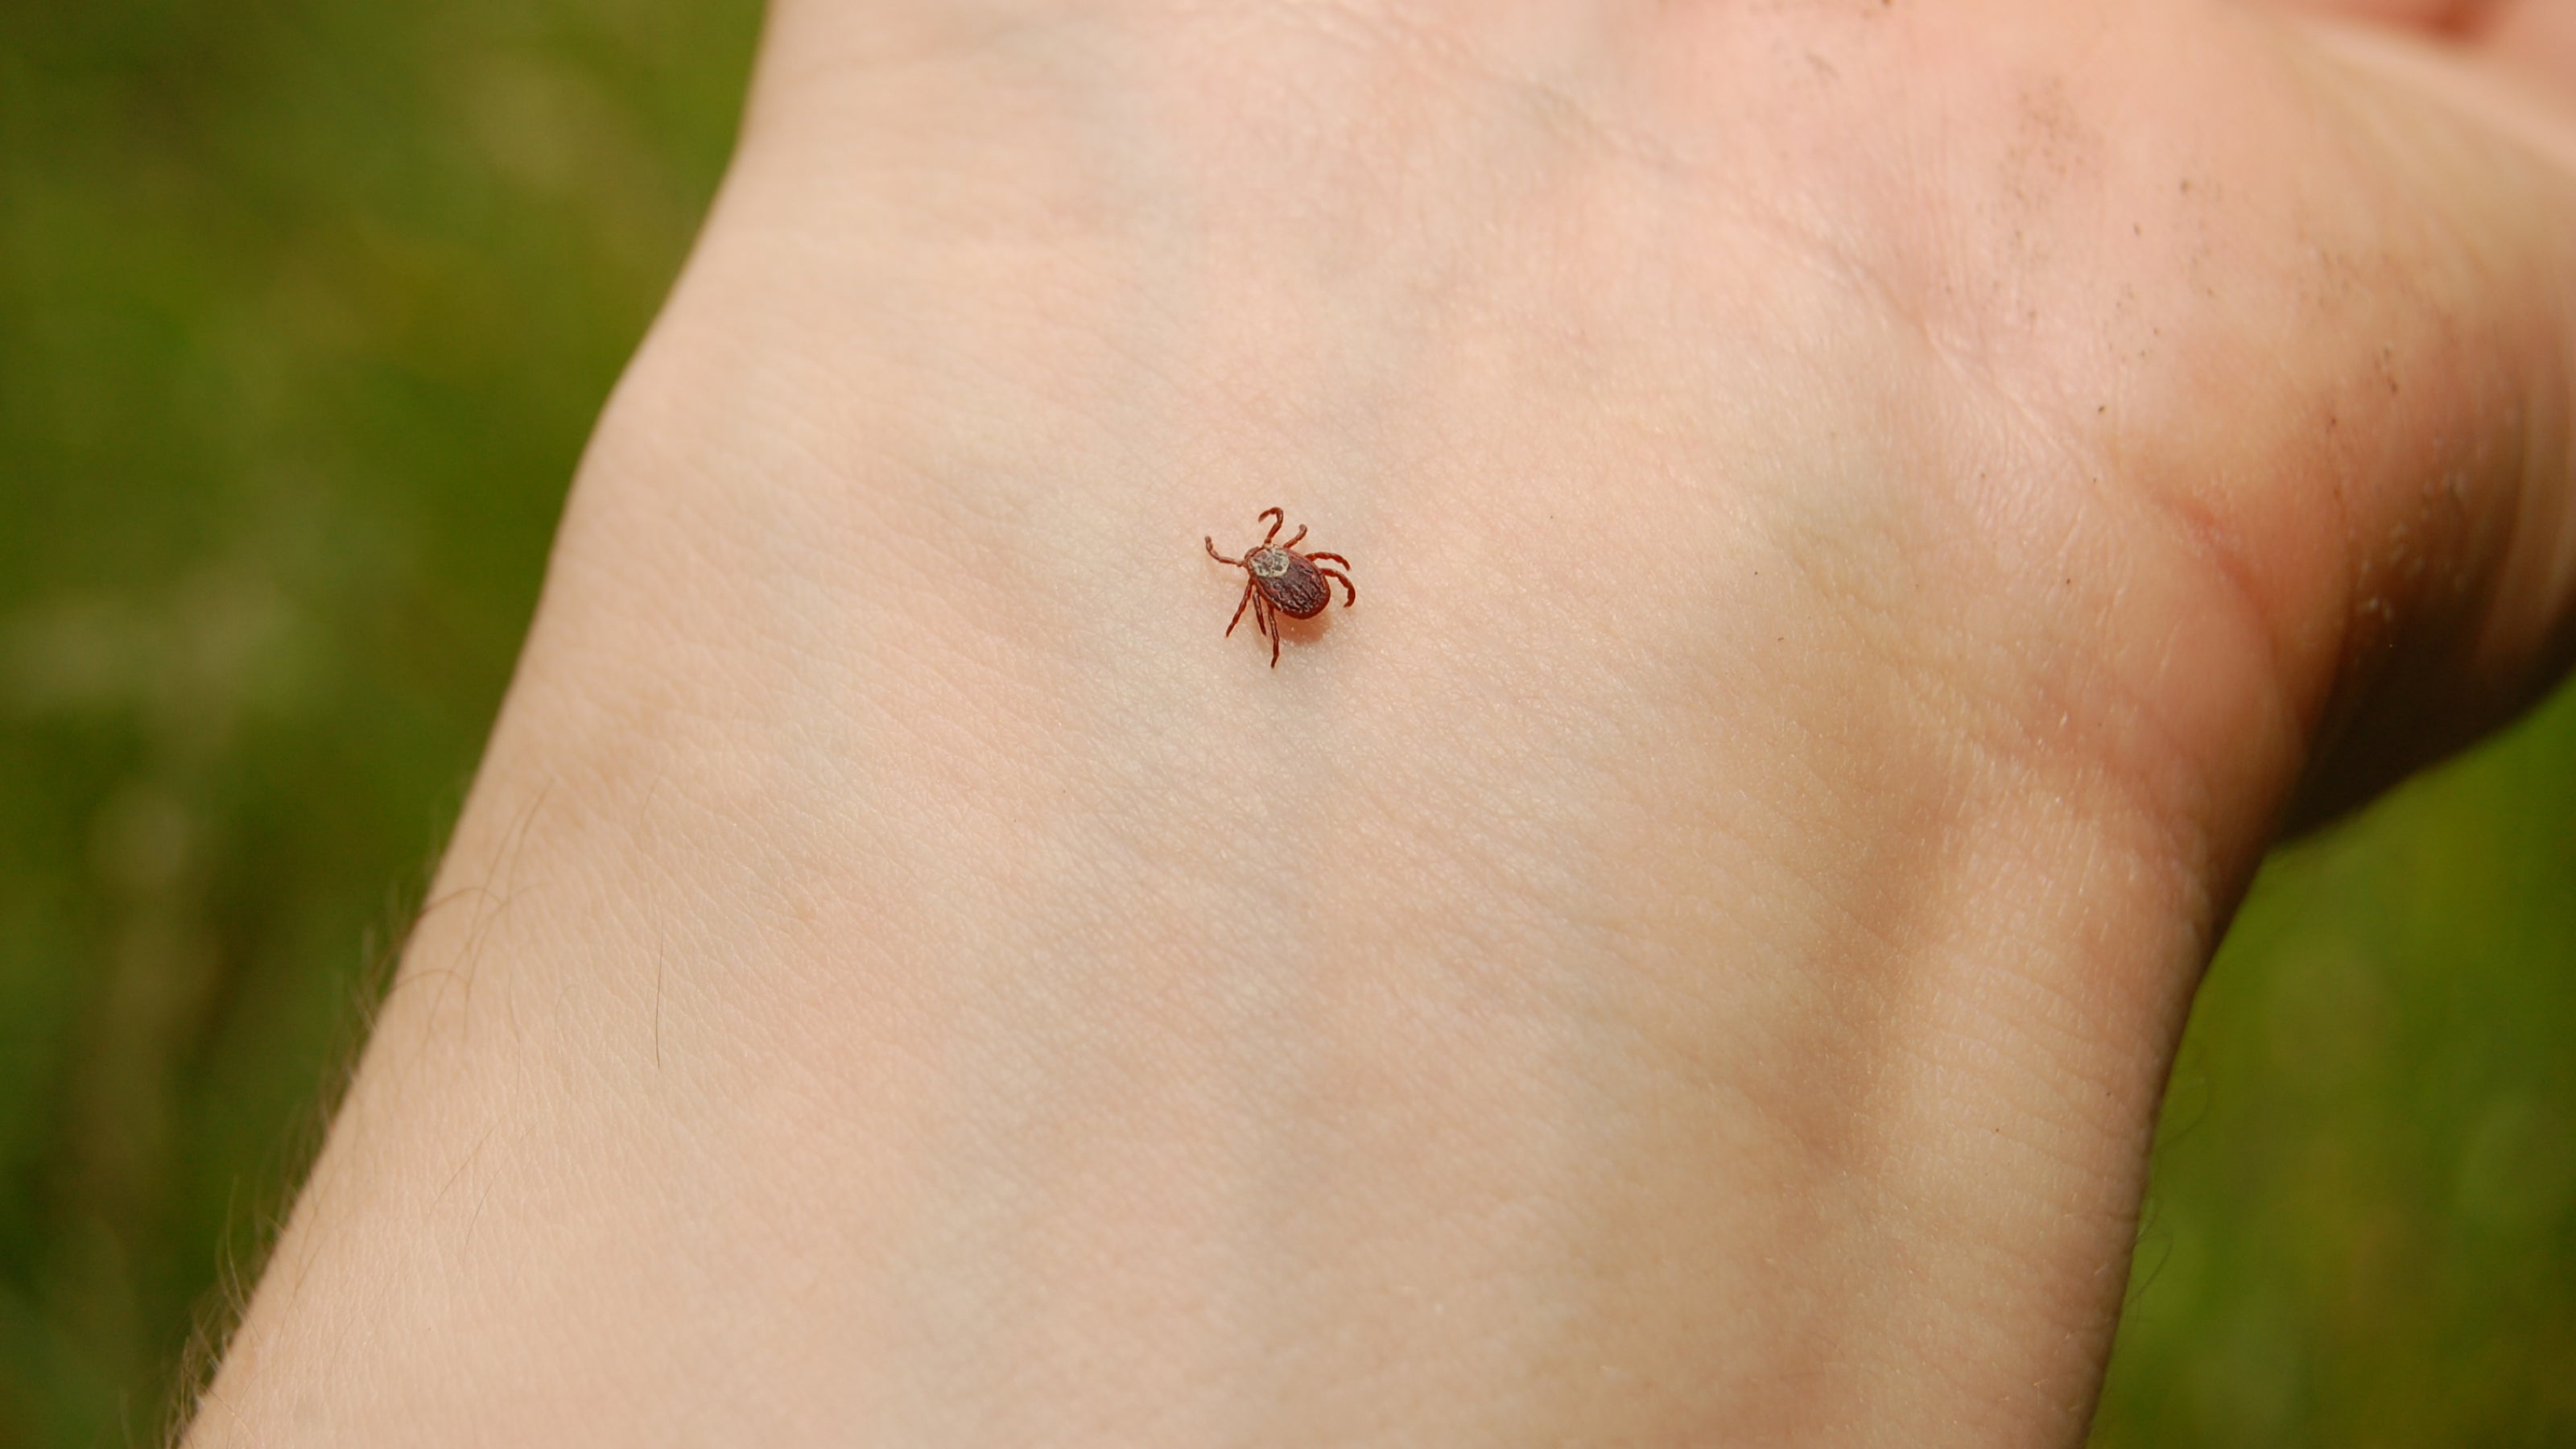 A small tick crawls on a bared wrist